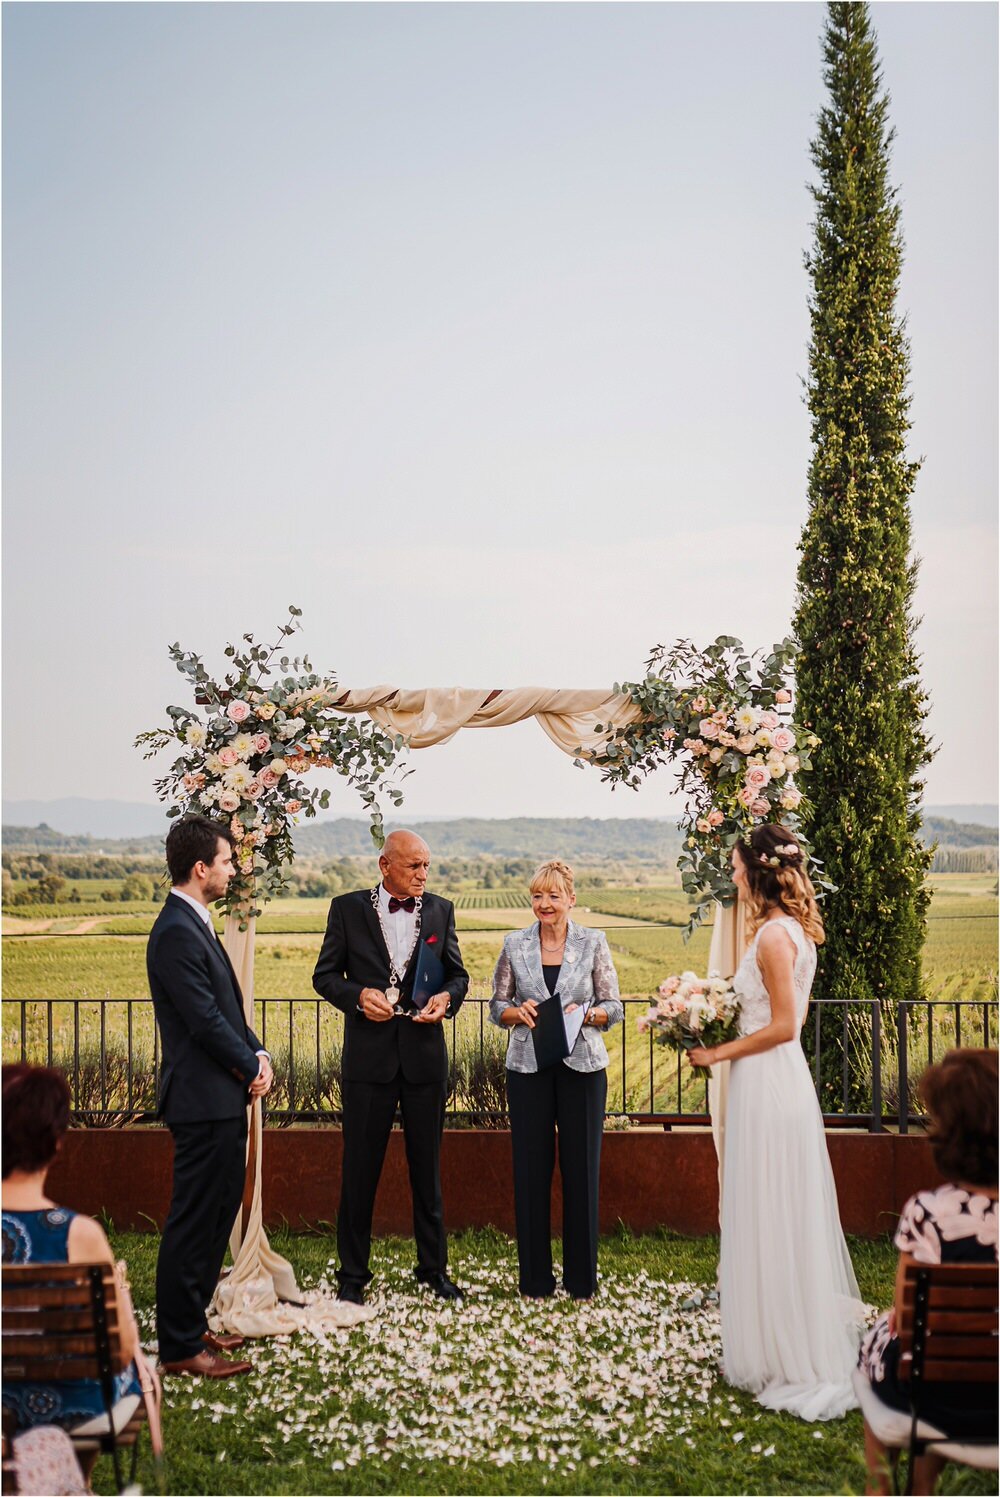 best of wedding photography 2019 photographer italy ireland tuscany santorini greece spain barcelona lake como chateux scotland destination wedding 0106.jpg